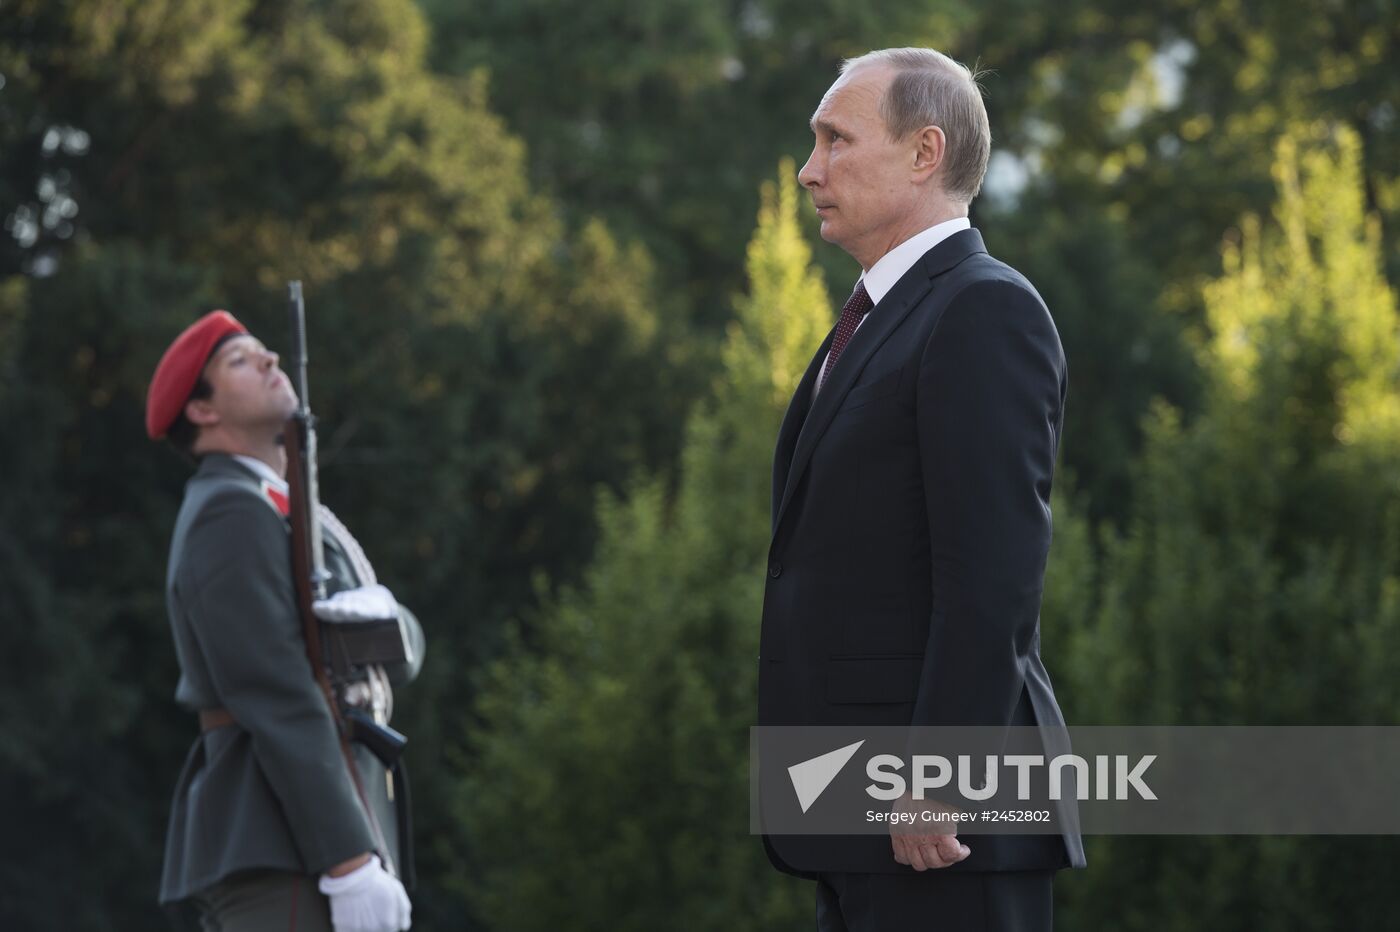 Vladimir Putin pays official visit to Austria